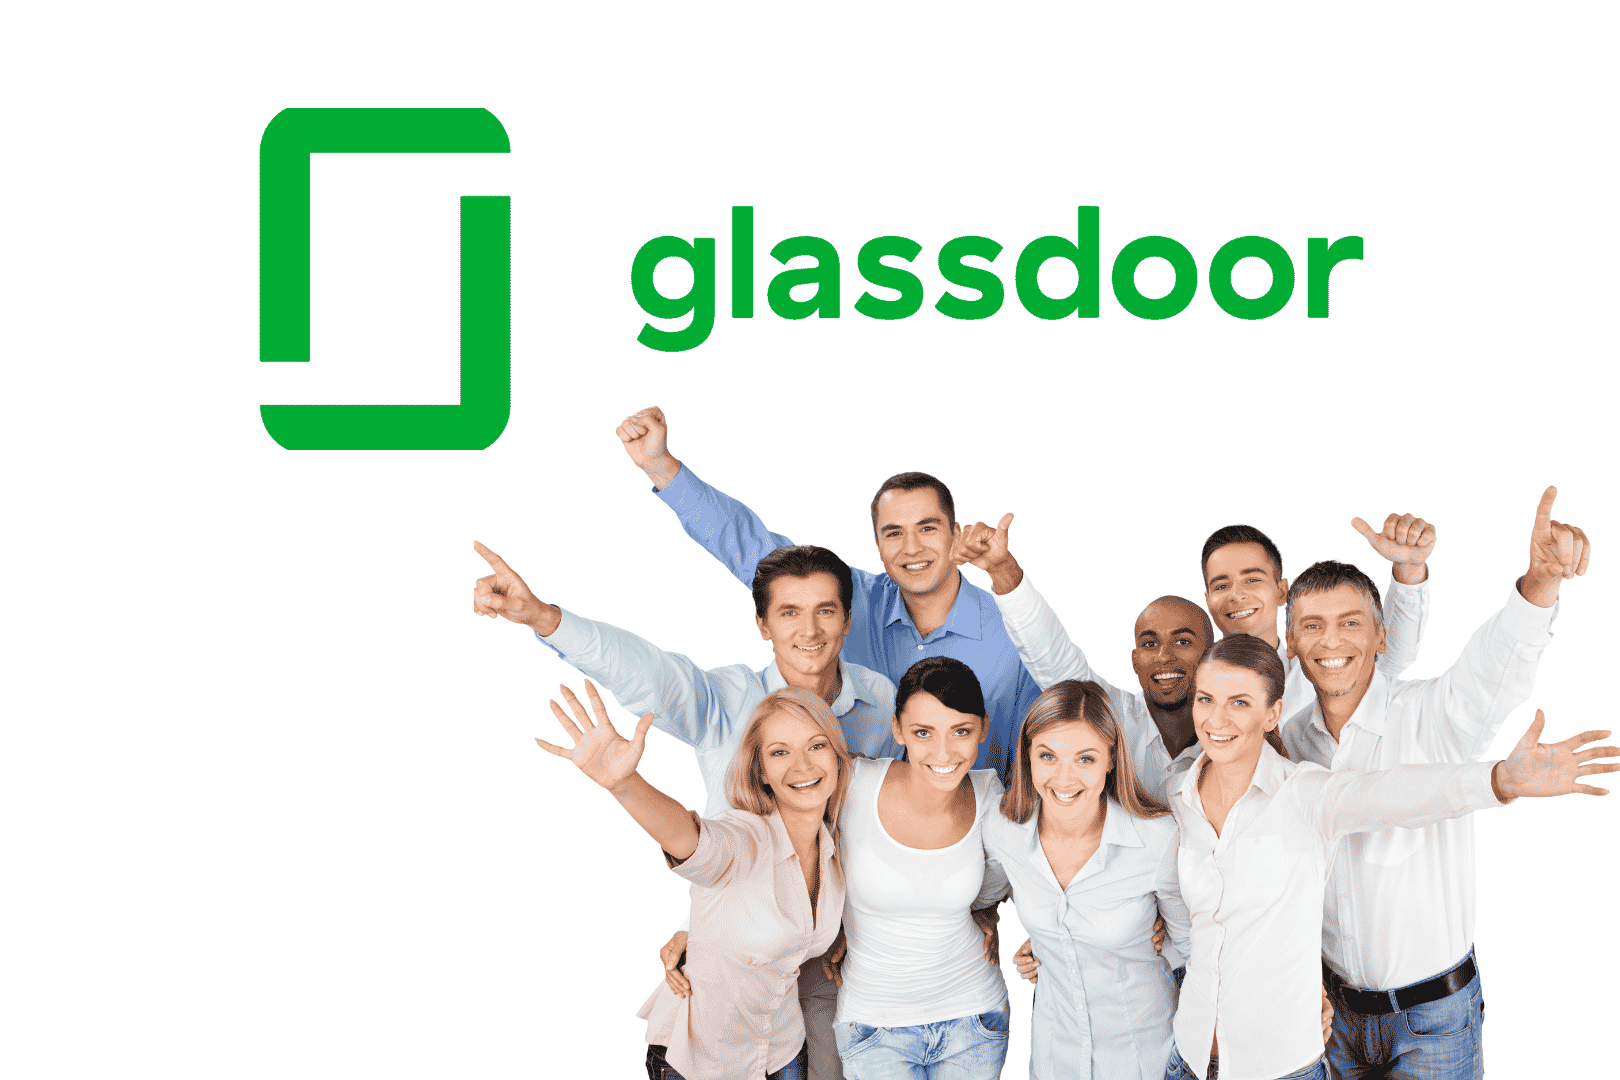 glass door logo and employees